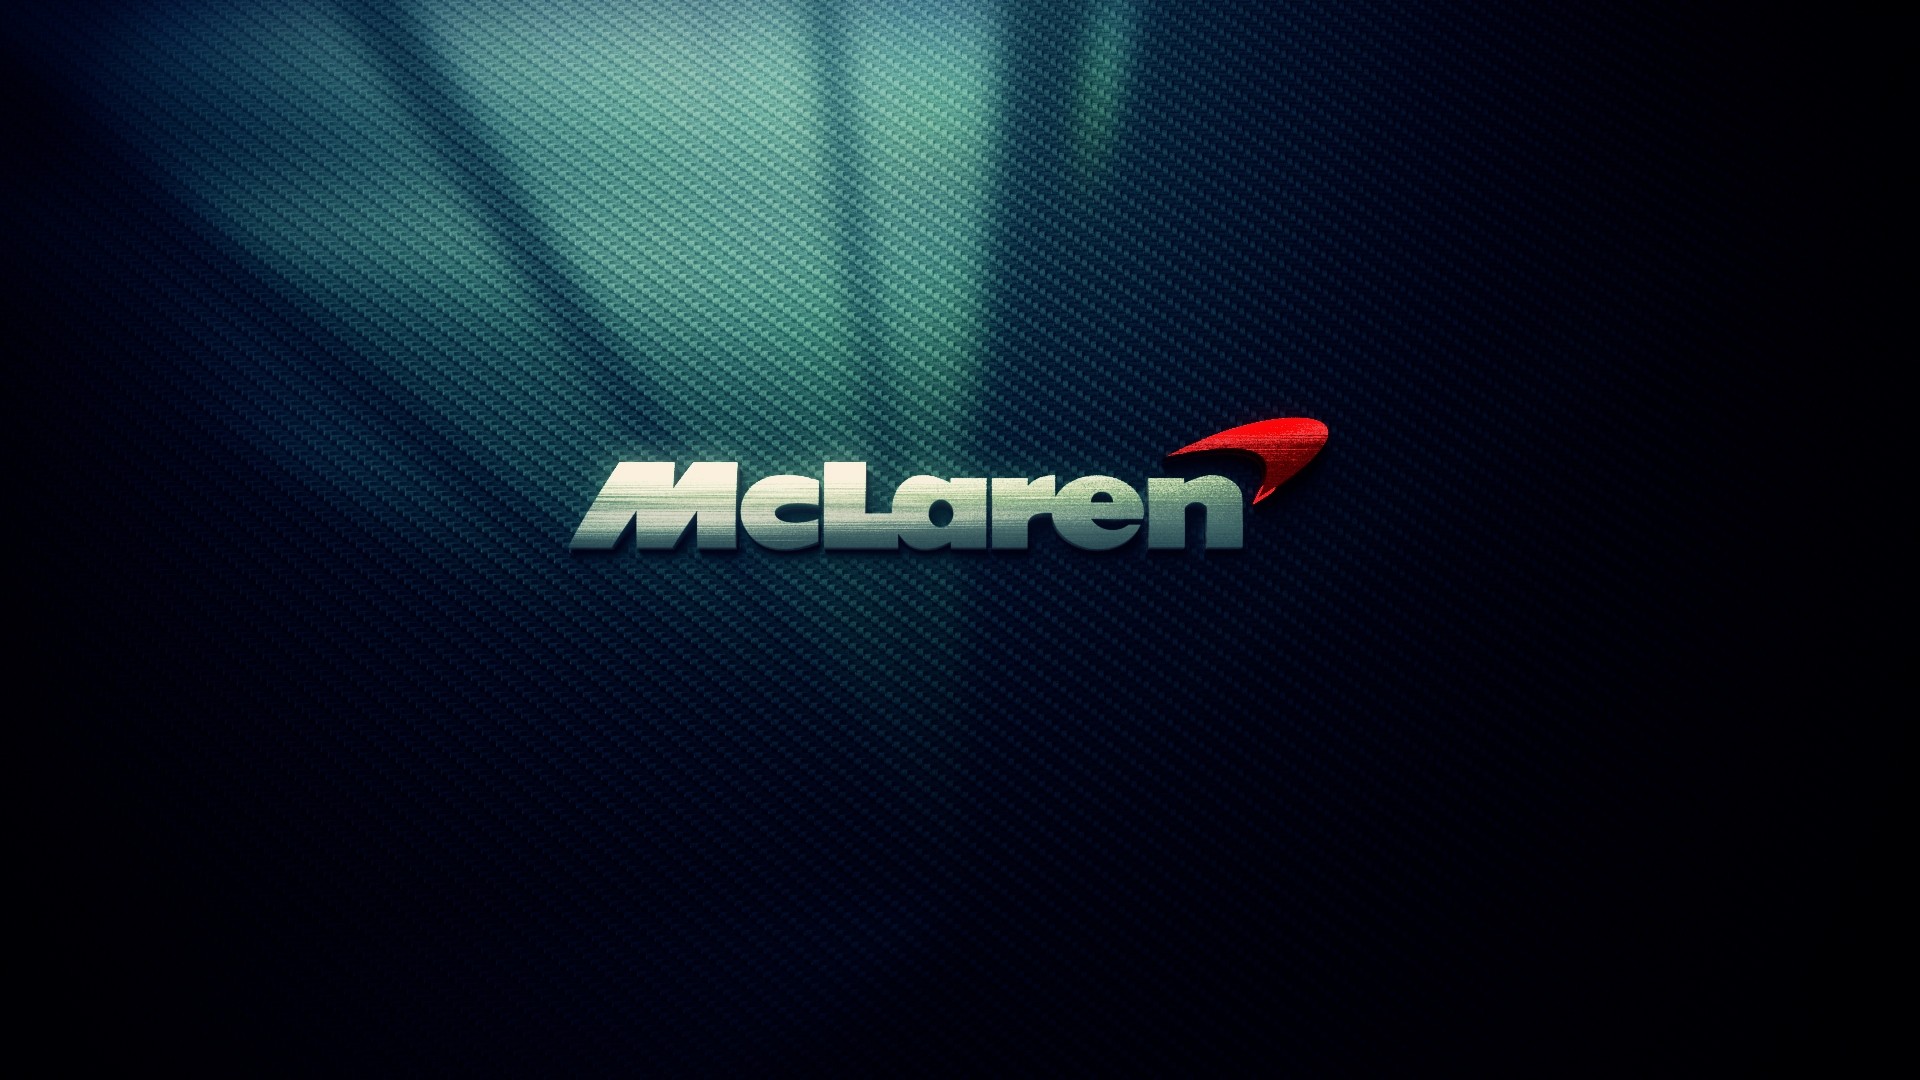 General 1920x1080 McLaren car logo brand